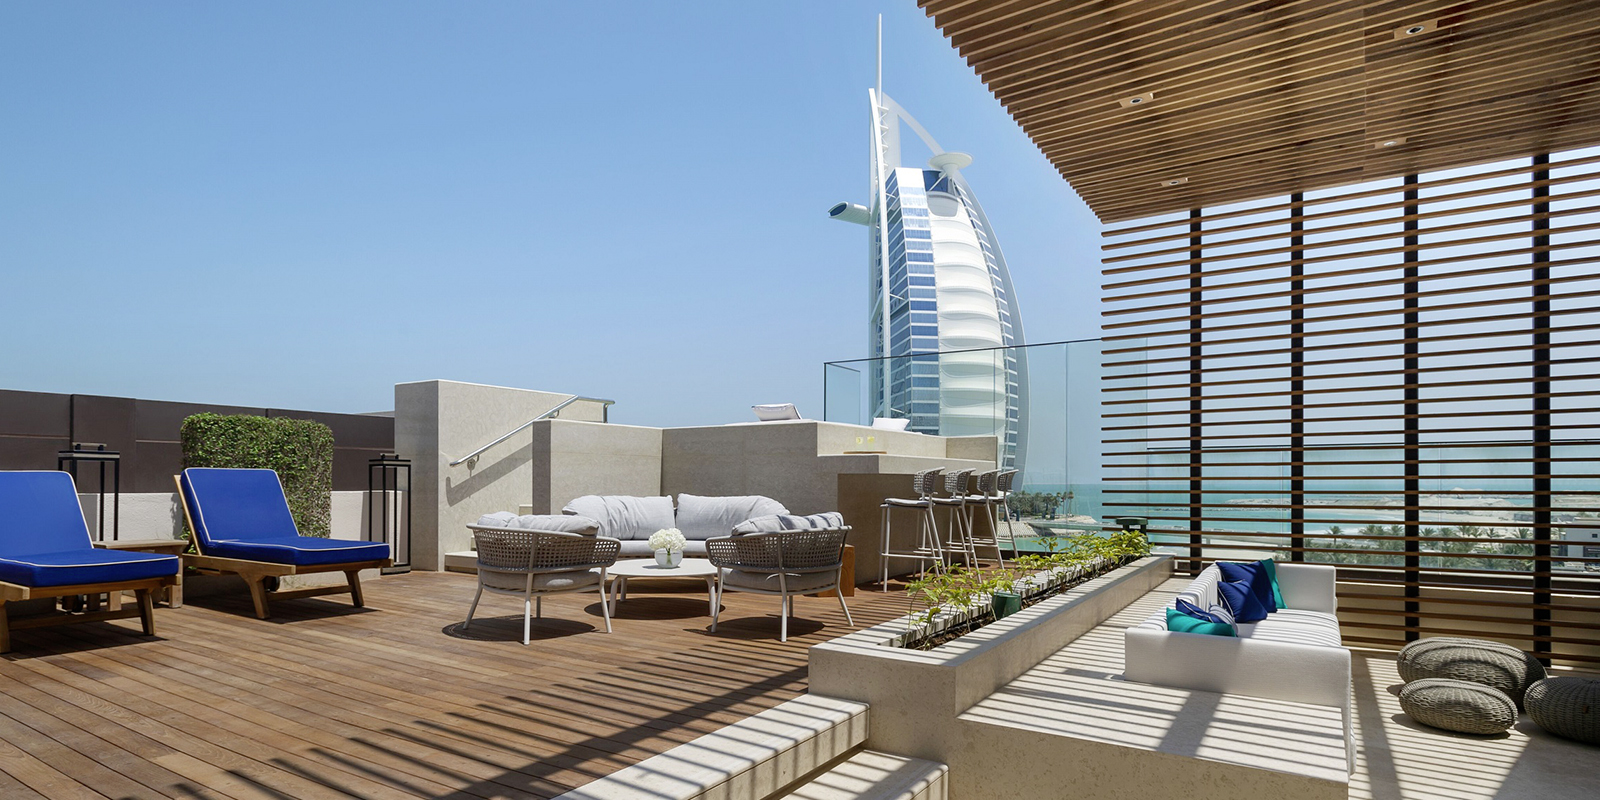 HOTEL NEWS: Taking luxury to new levels in Dubai | Luxury Travel